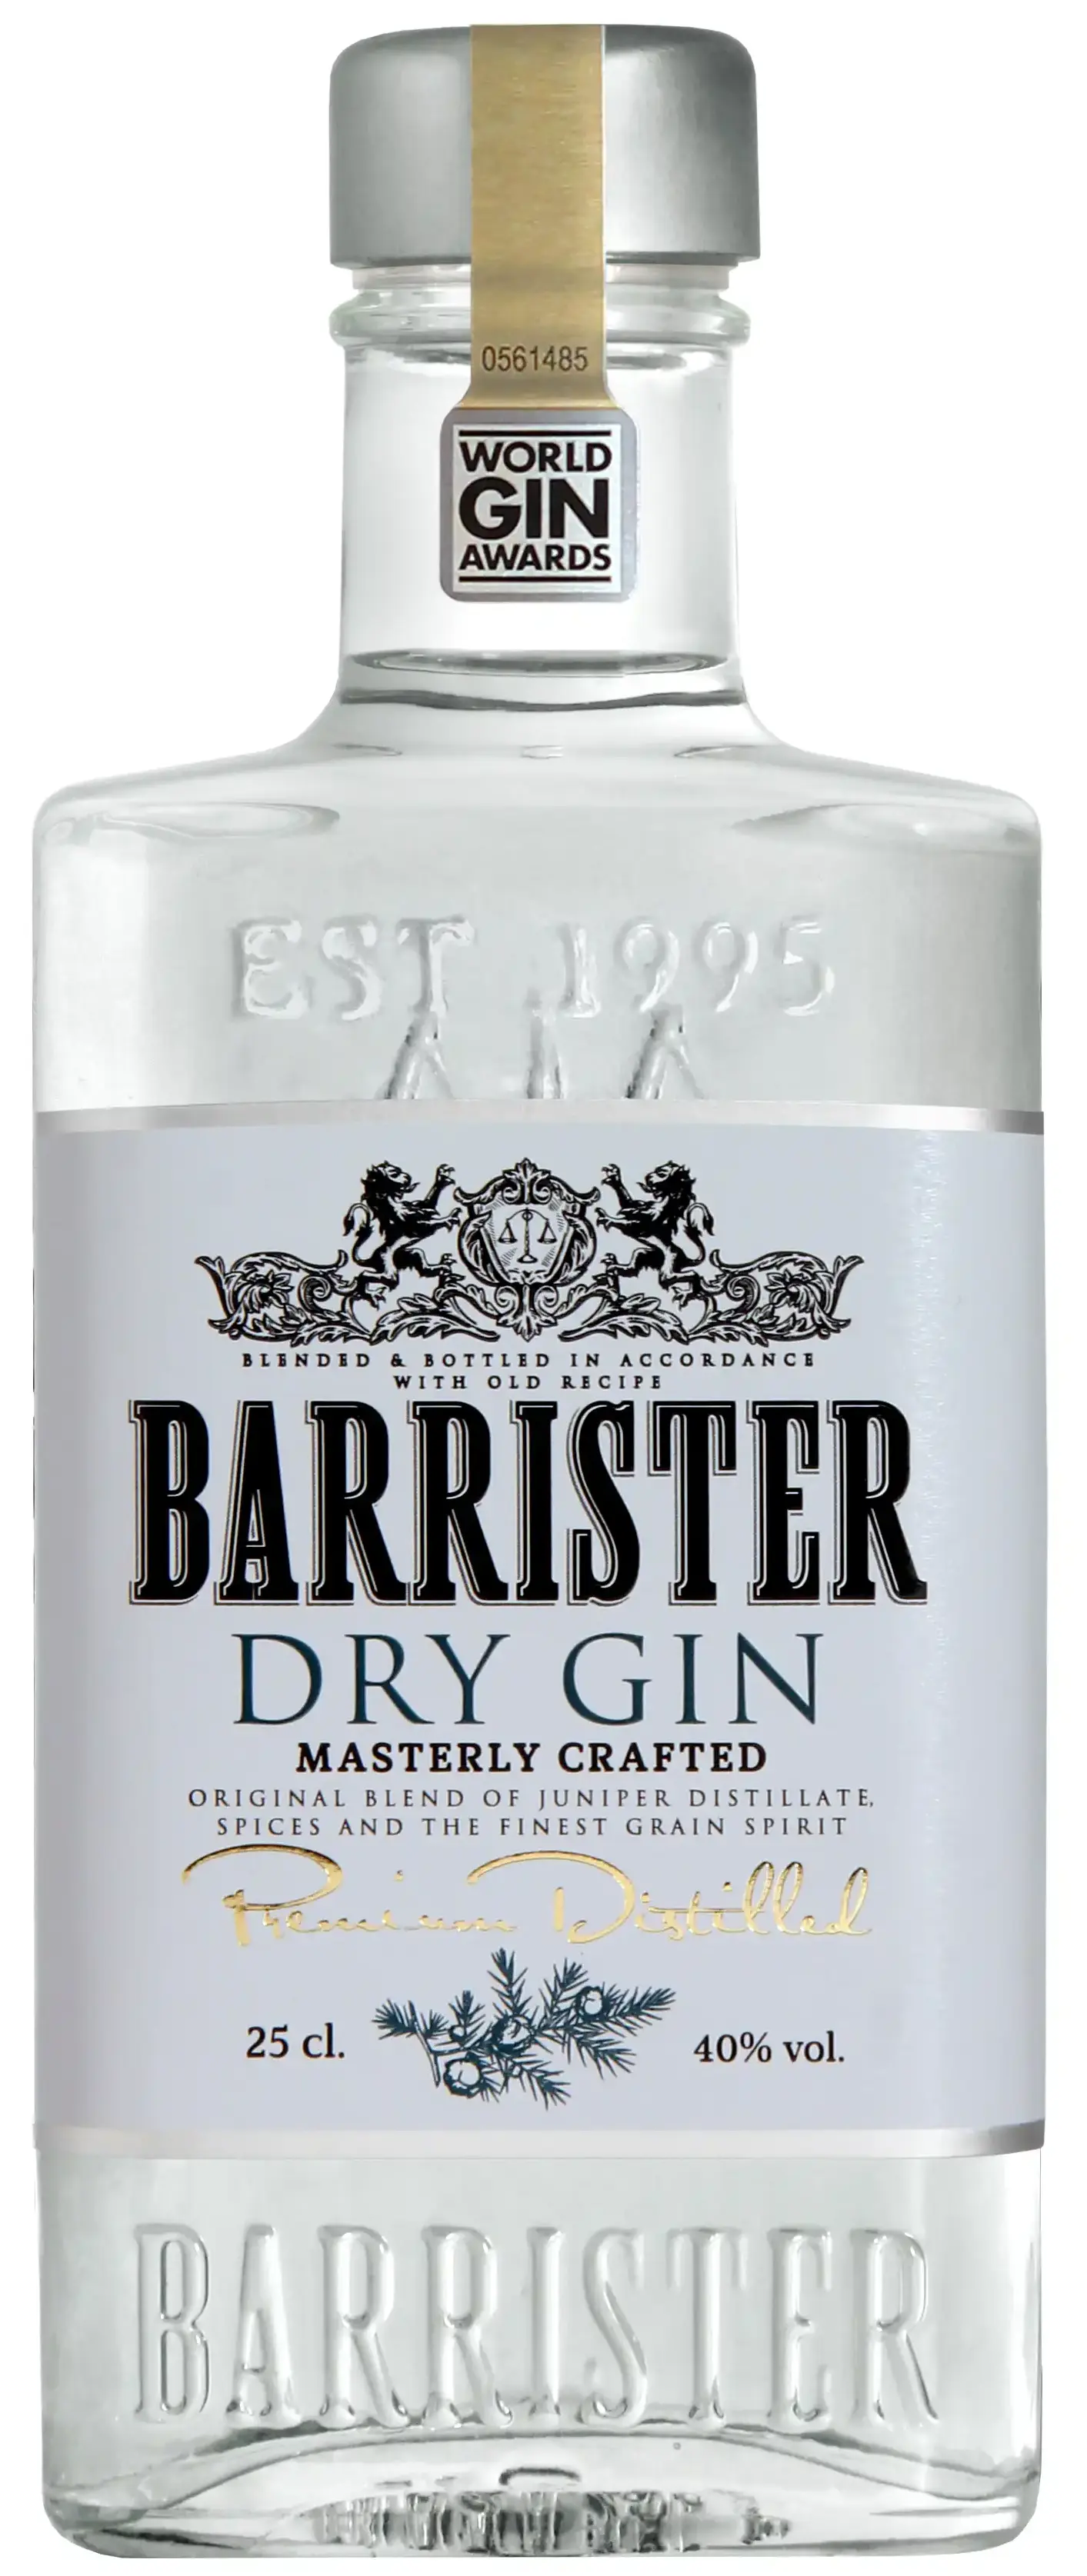 Barrister Dry Gin (Барристер Драй)